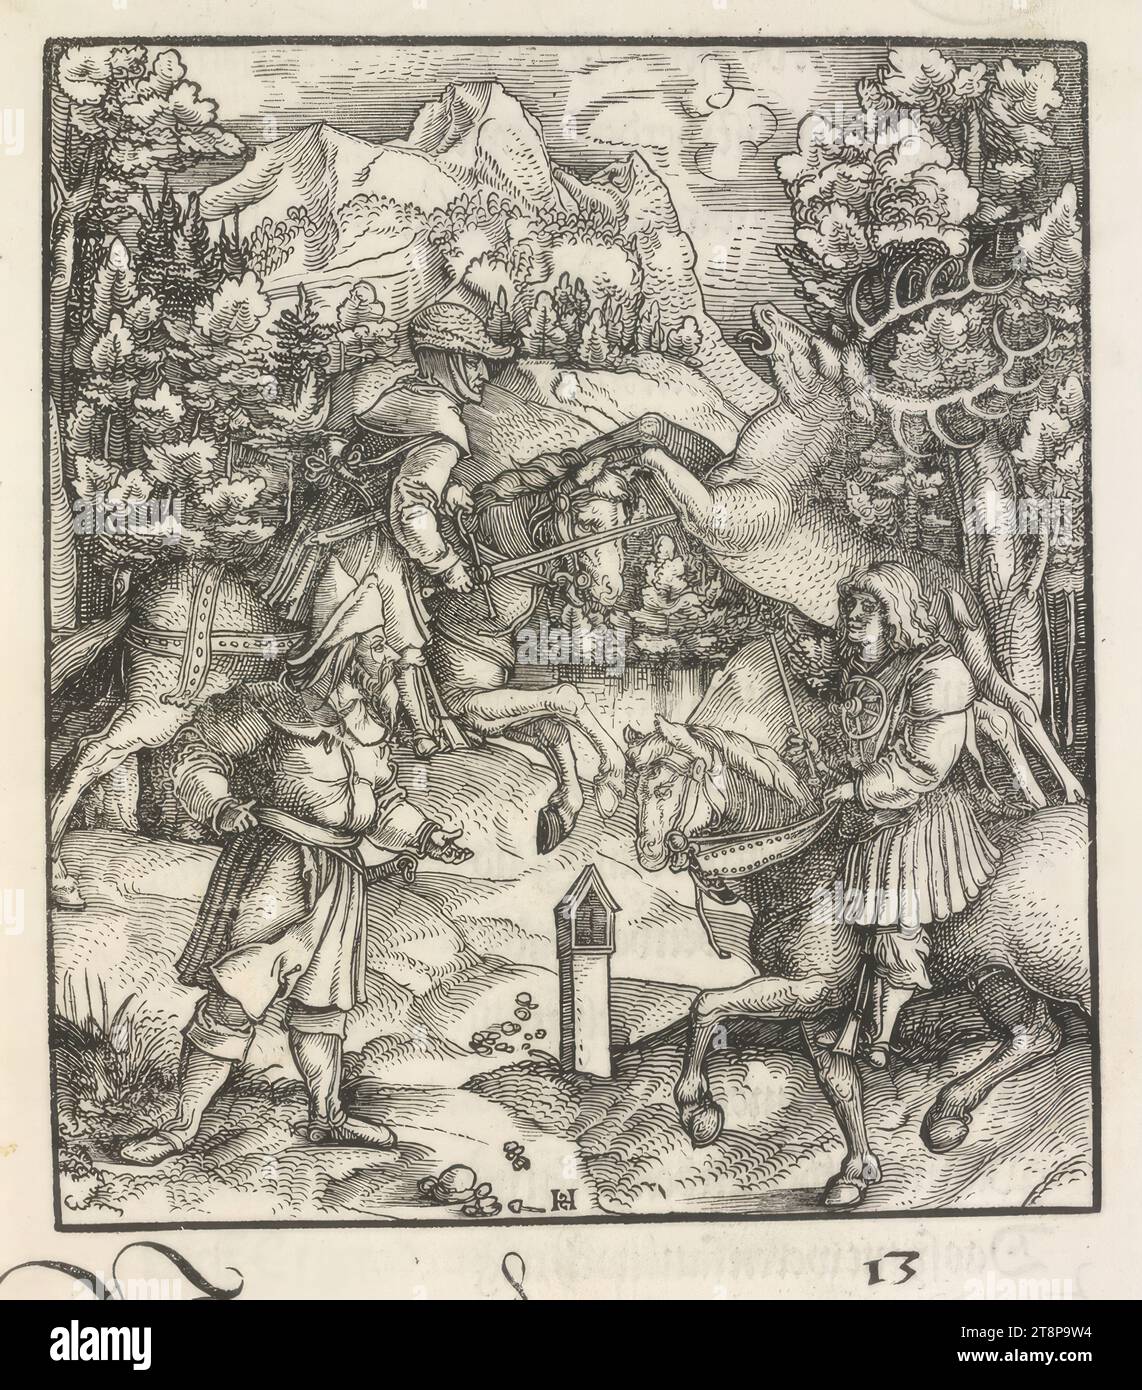 Theuerdank: Image 13 - Theuerdank kills an oncoming stag with his sword from a horse, The 'Theuerdank' of Emperor Maximilian I, Hans Schäufelin (Upper Rhine around 1482/83 - 1539/40 Nördlingen), 1517, print, woodcut, sheet: 34 .7 x 24.3 cm Stock Photo